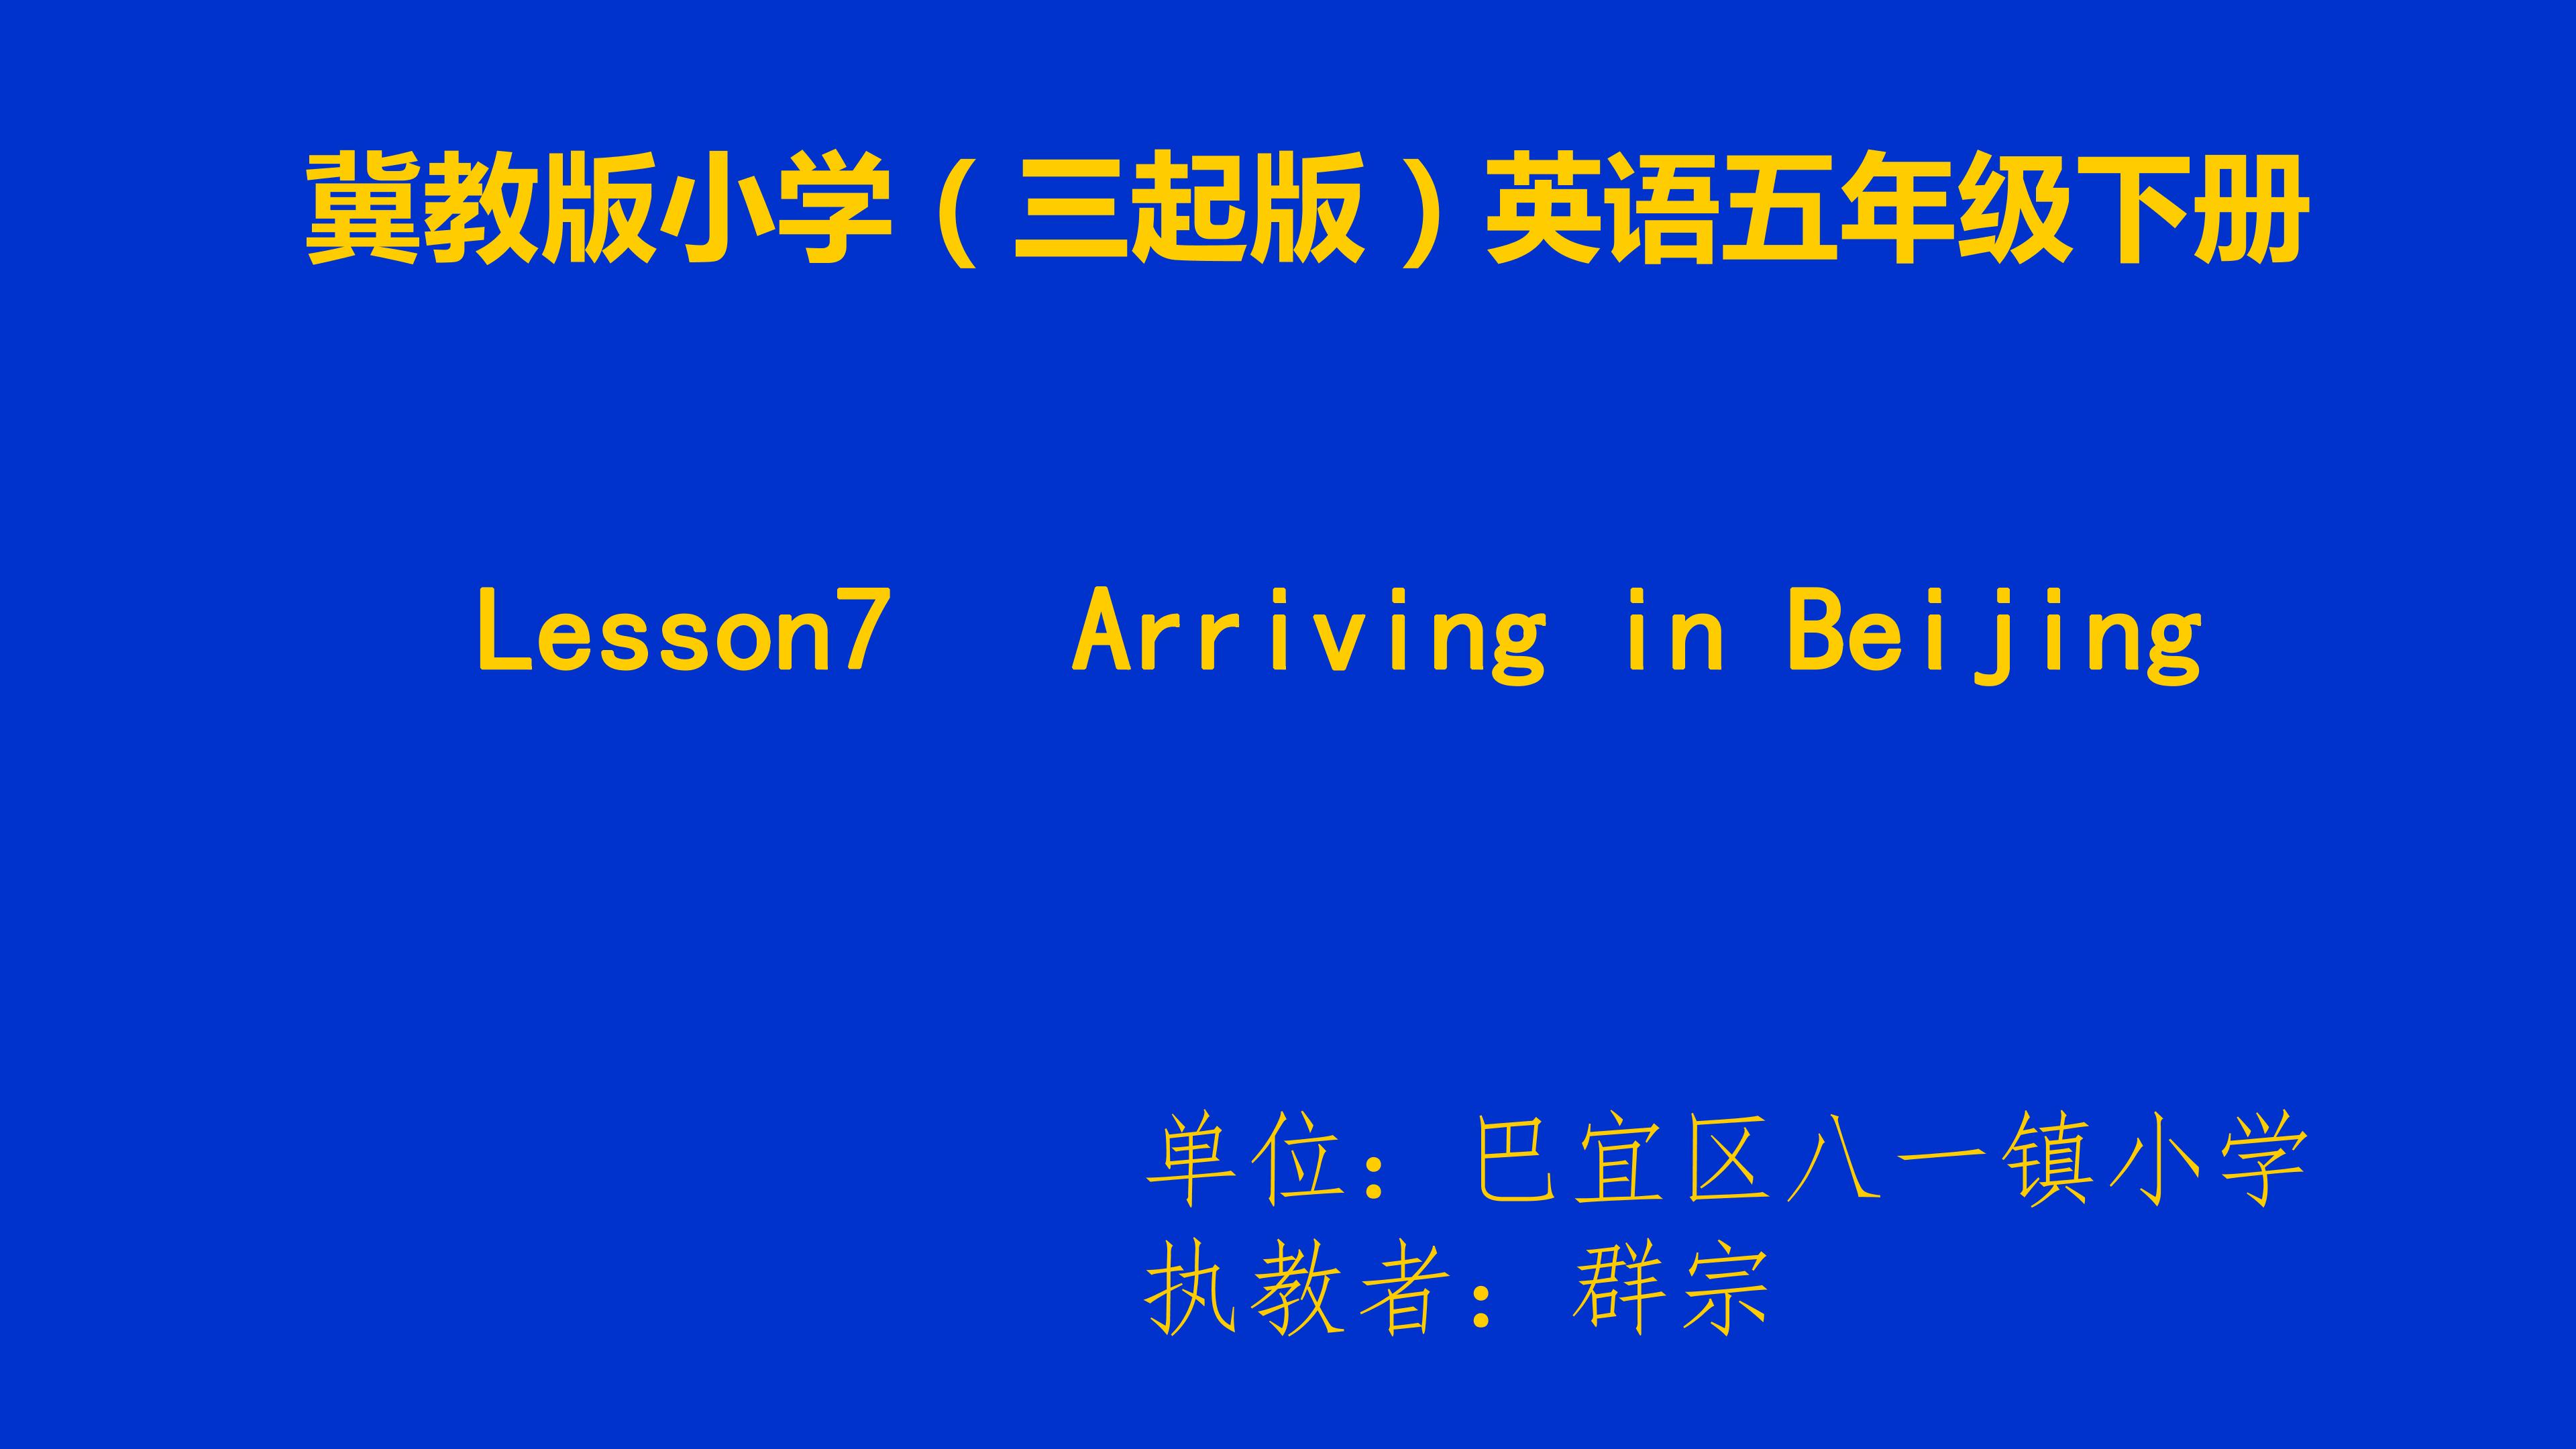 Lesson 7 Arriving in Beijing